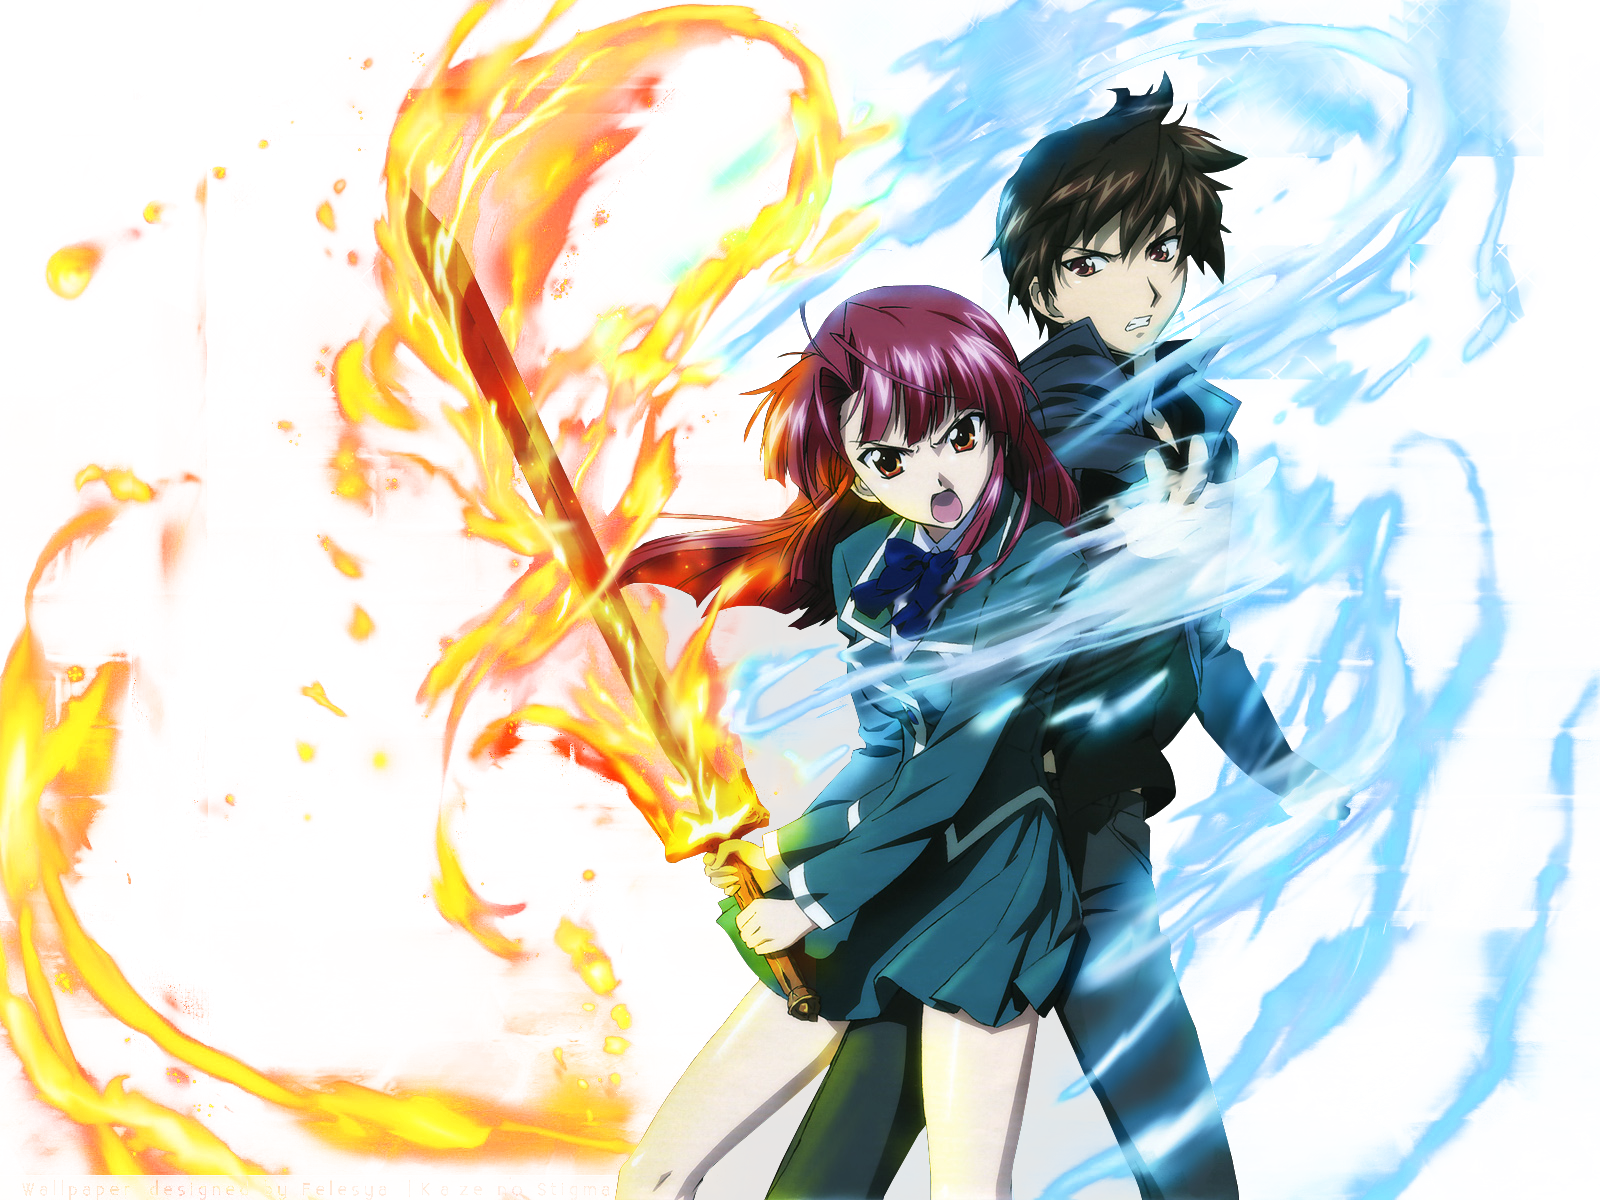 Kazuma Yagami - Other & Anime Background Wallpapers on Desktop Nexus (Image  1383015)